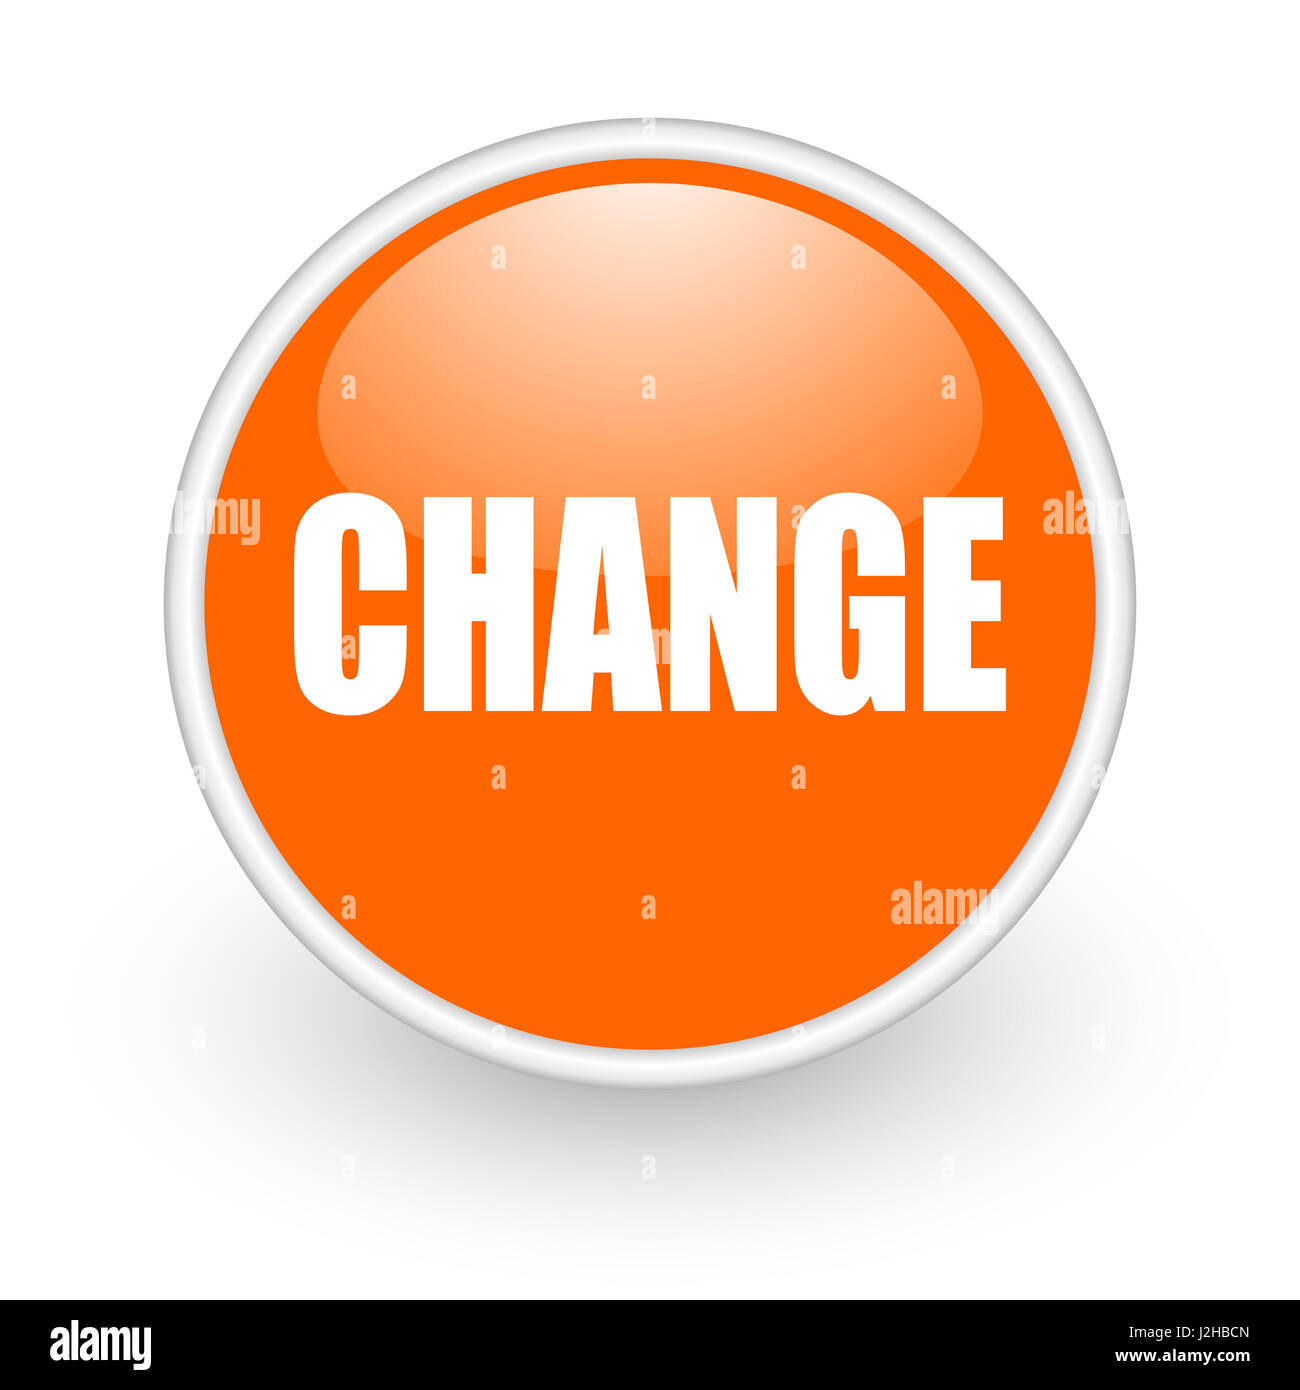 Change modern design glossy orange web icon on white background. Stock Photo